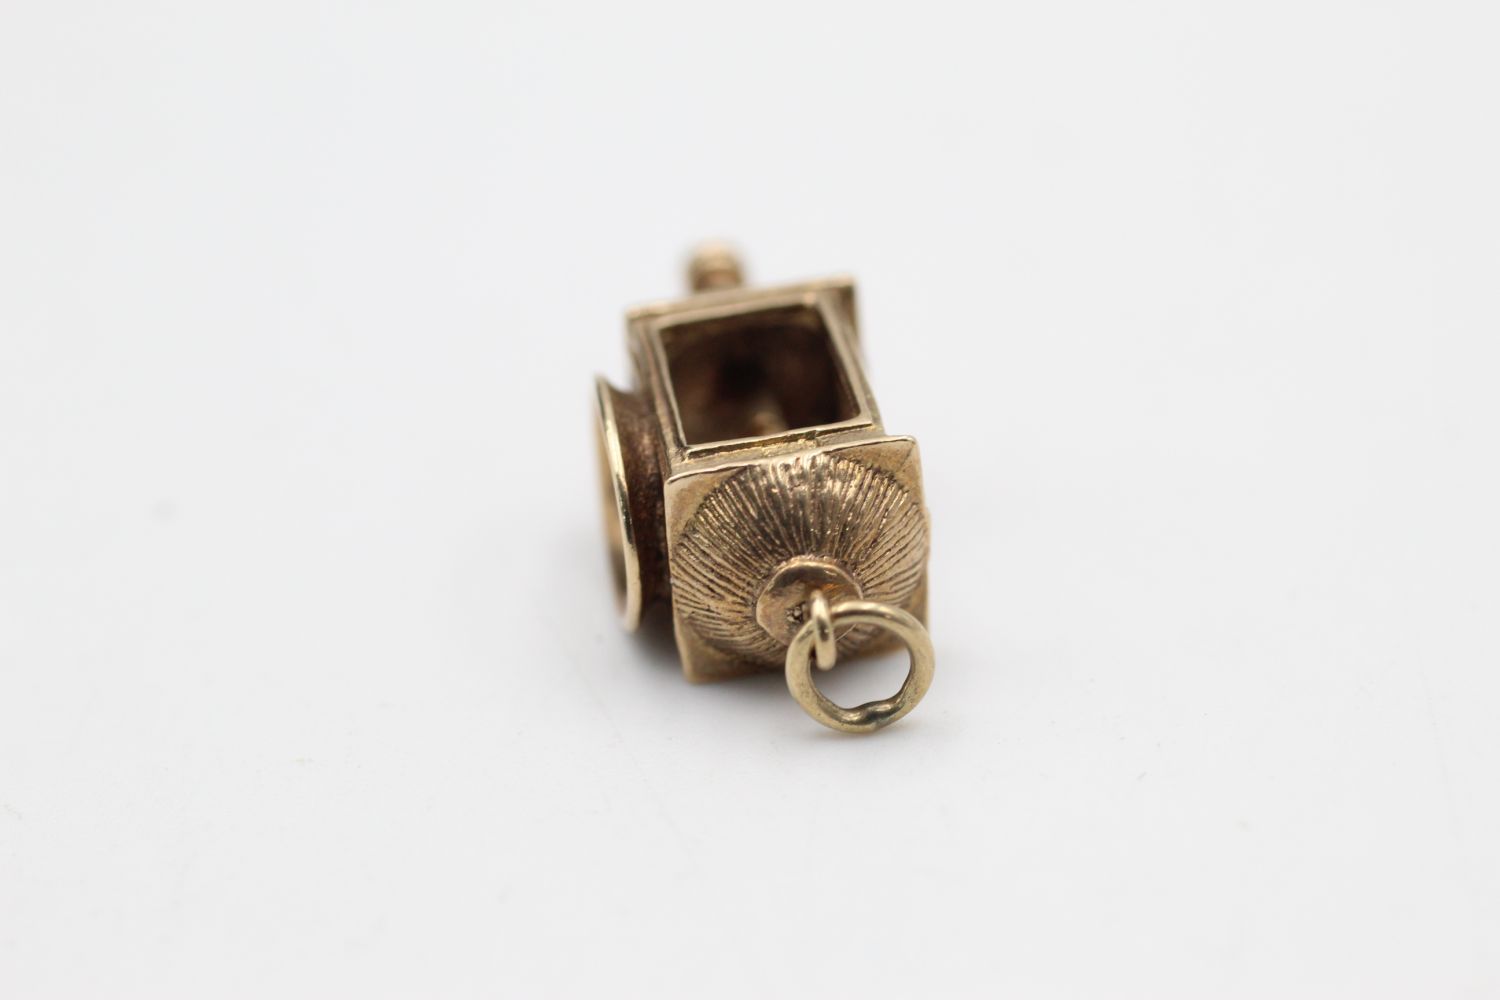 vintage 9ct gold lantern charm / pendant, missing stone 2.7 grams gross - Image 2 of 5